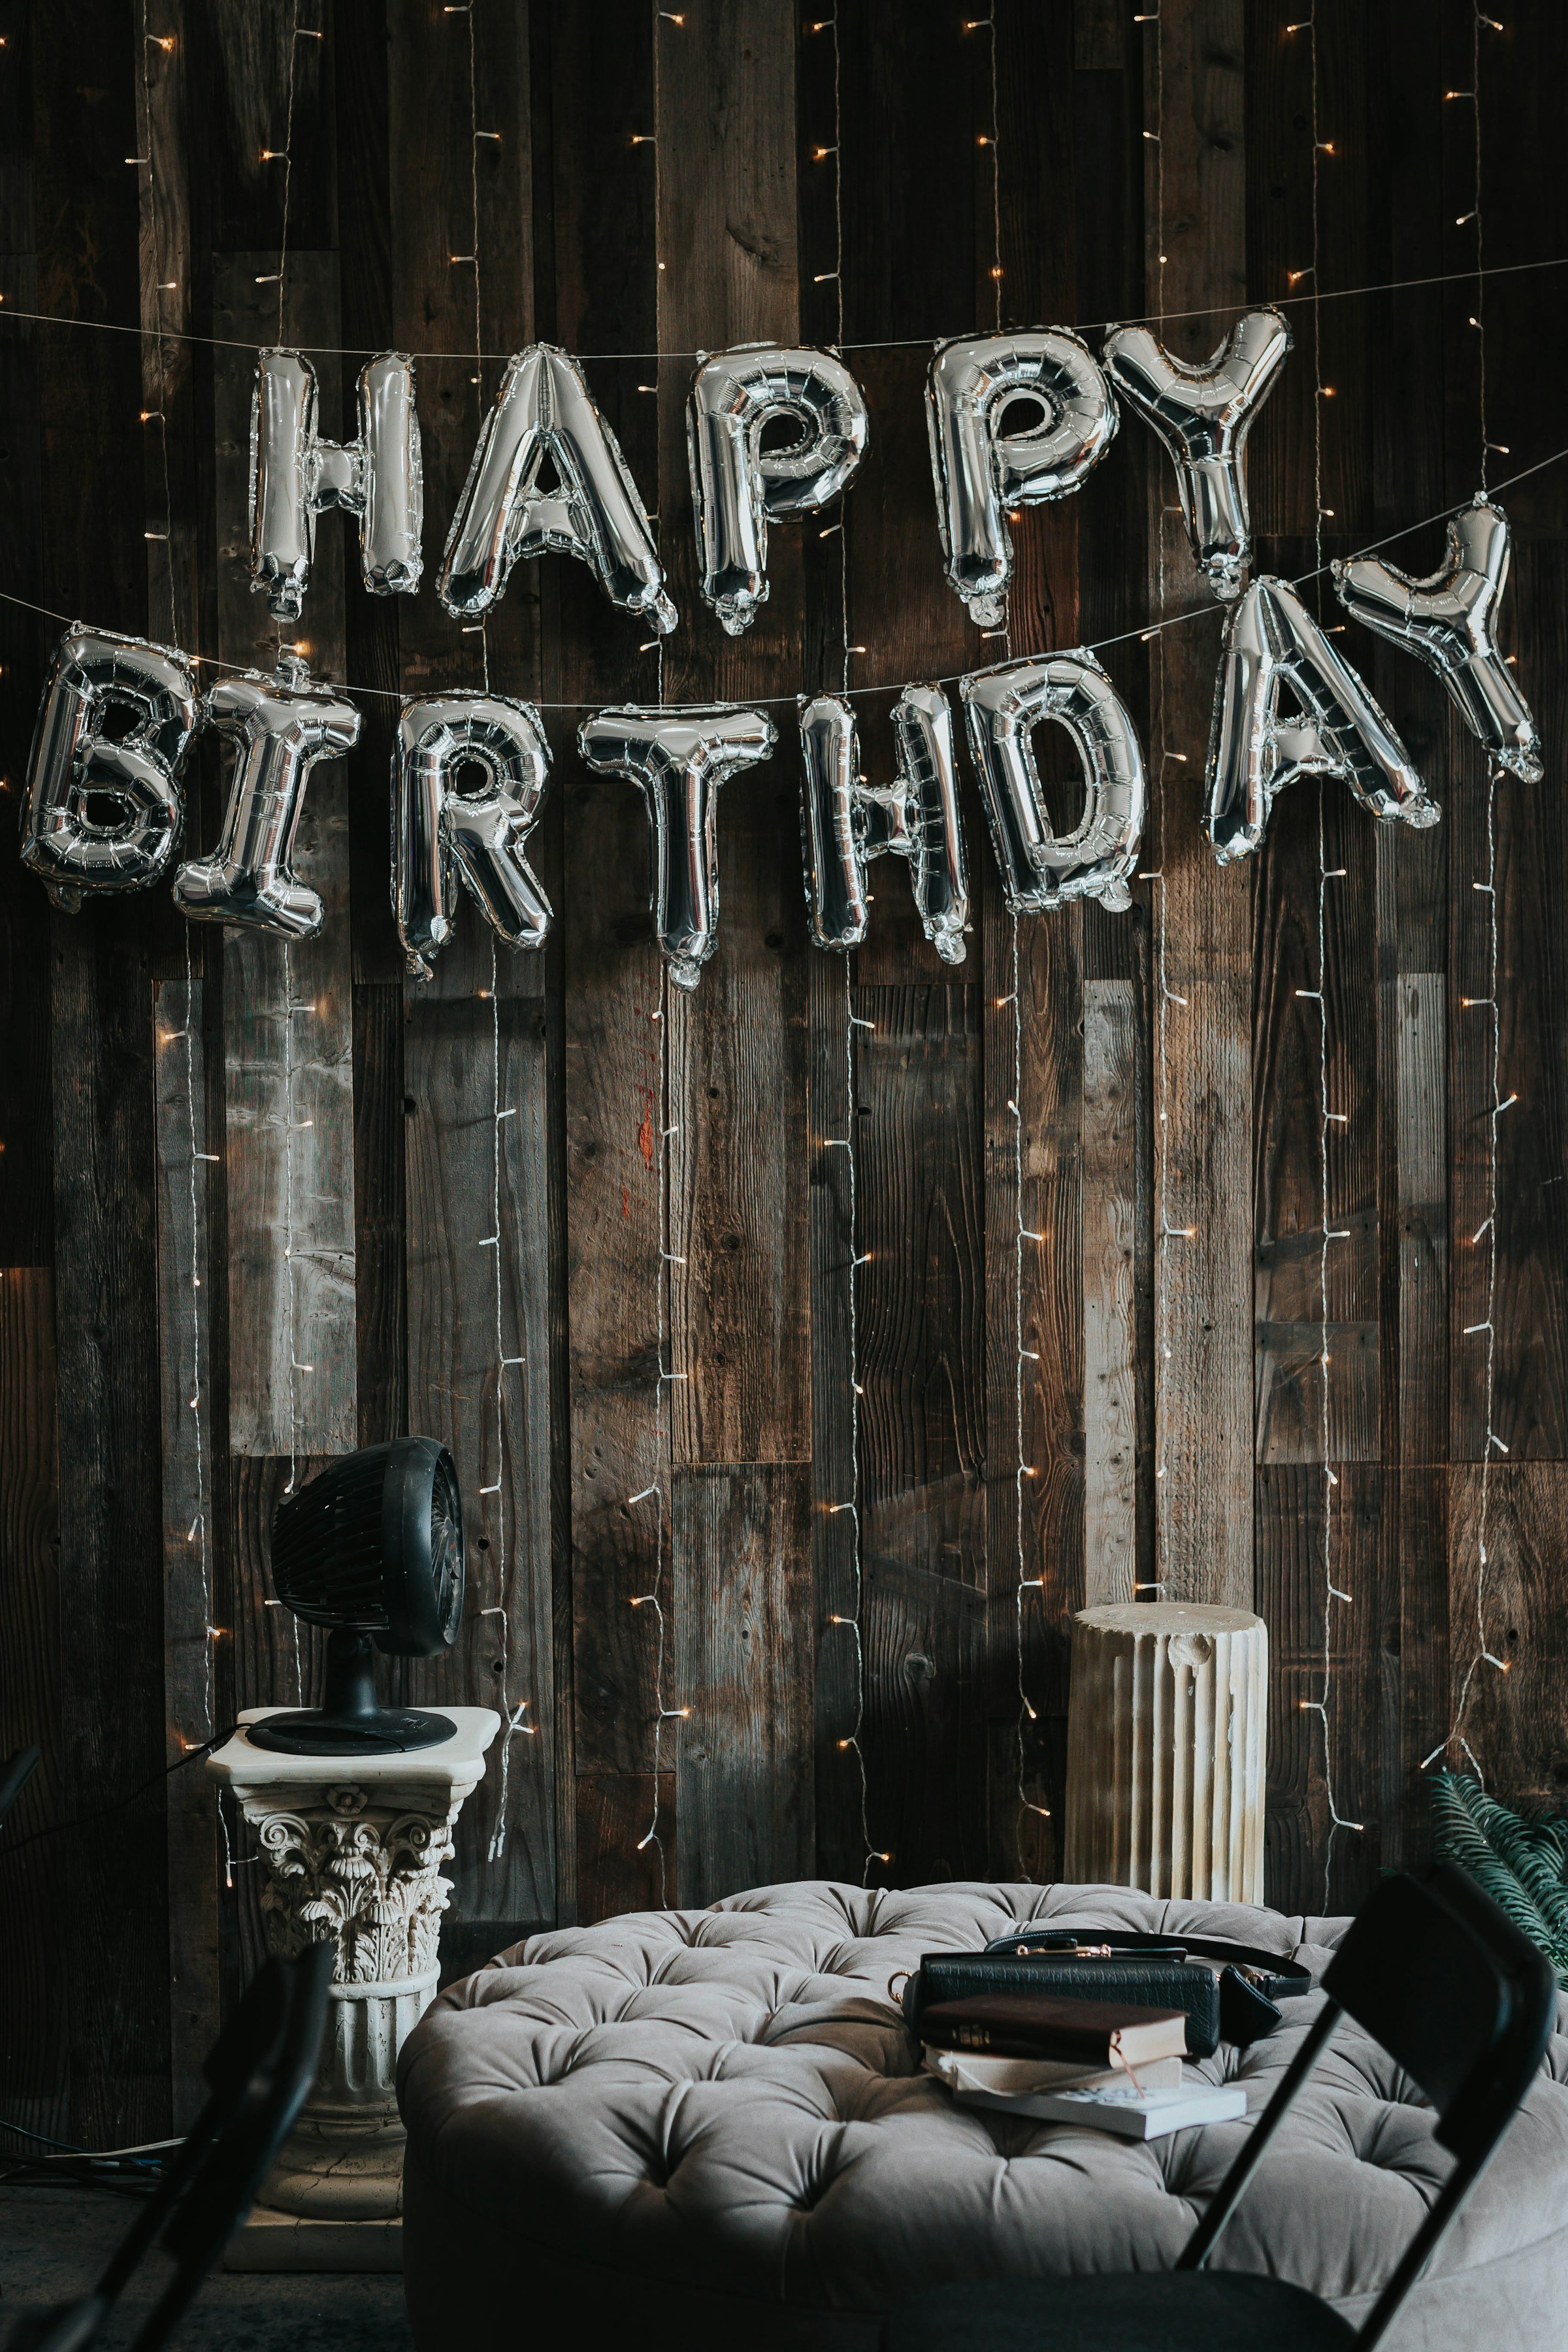 A birthday party set up | Source: Unsplash